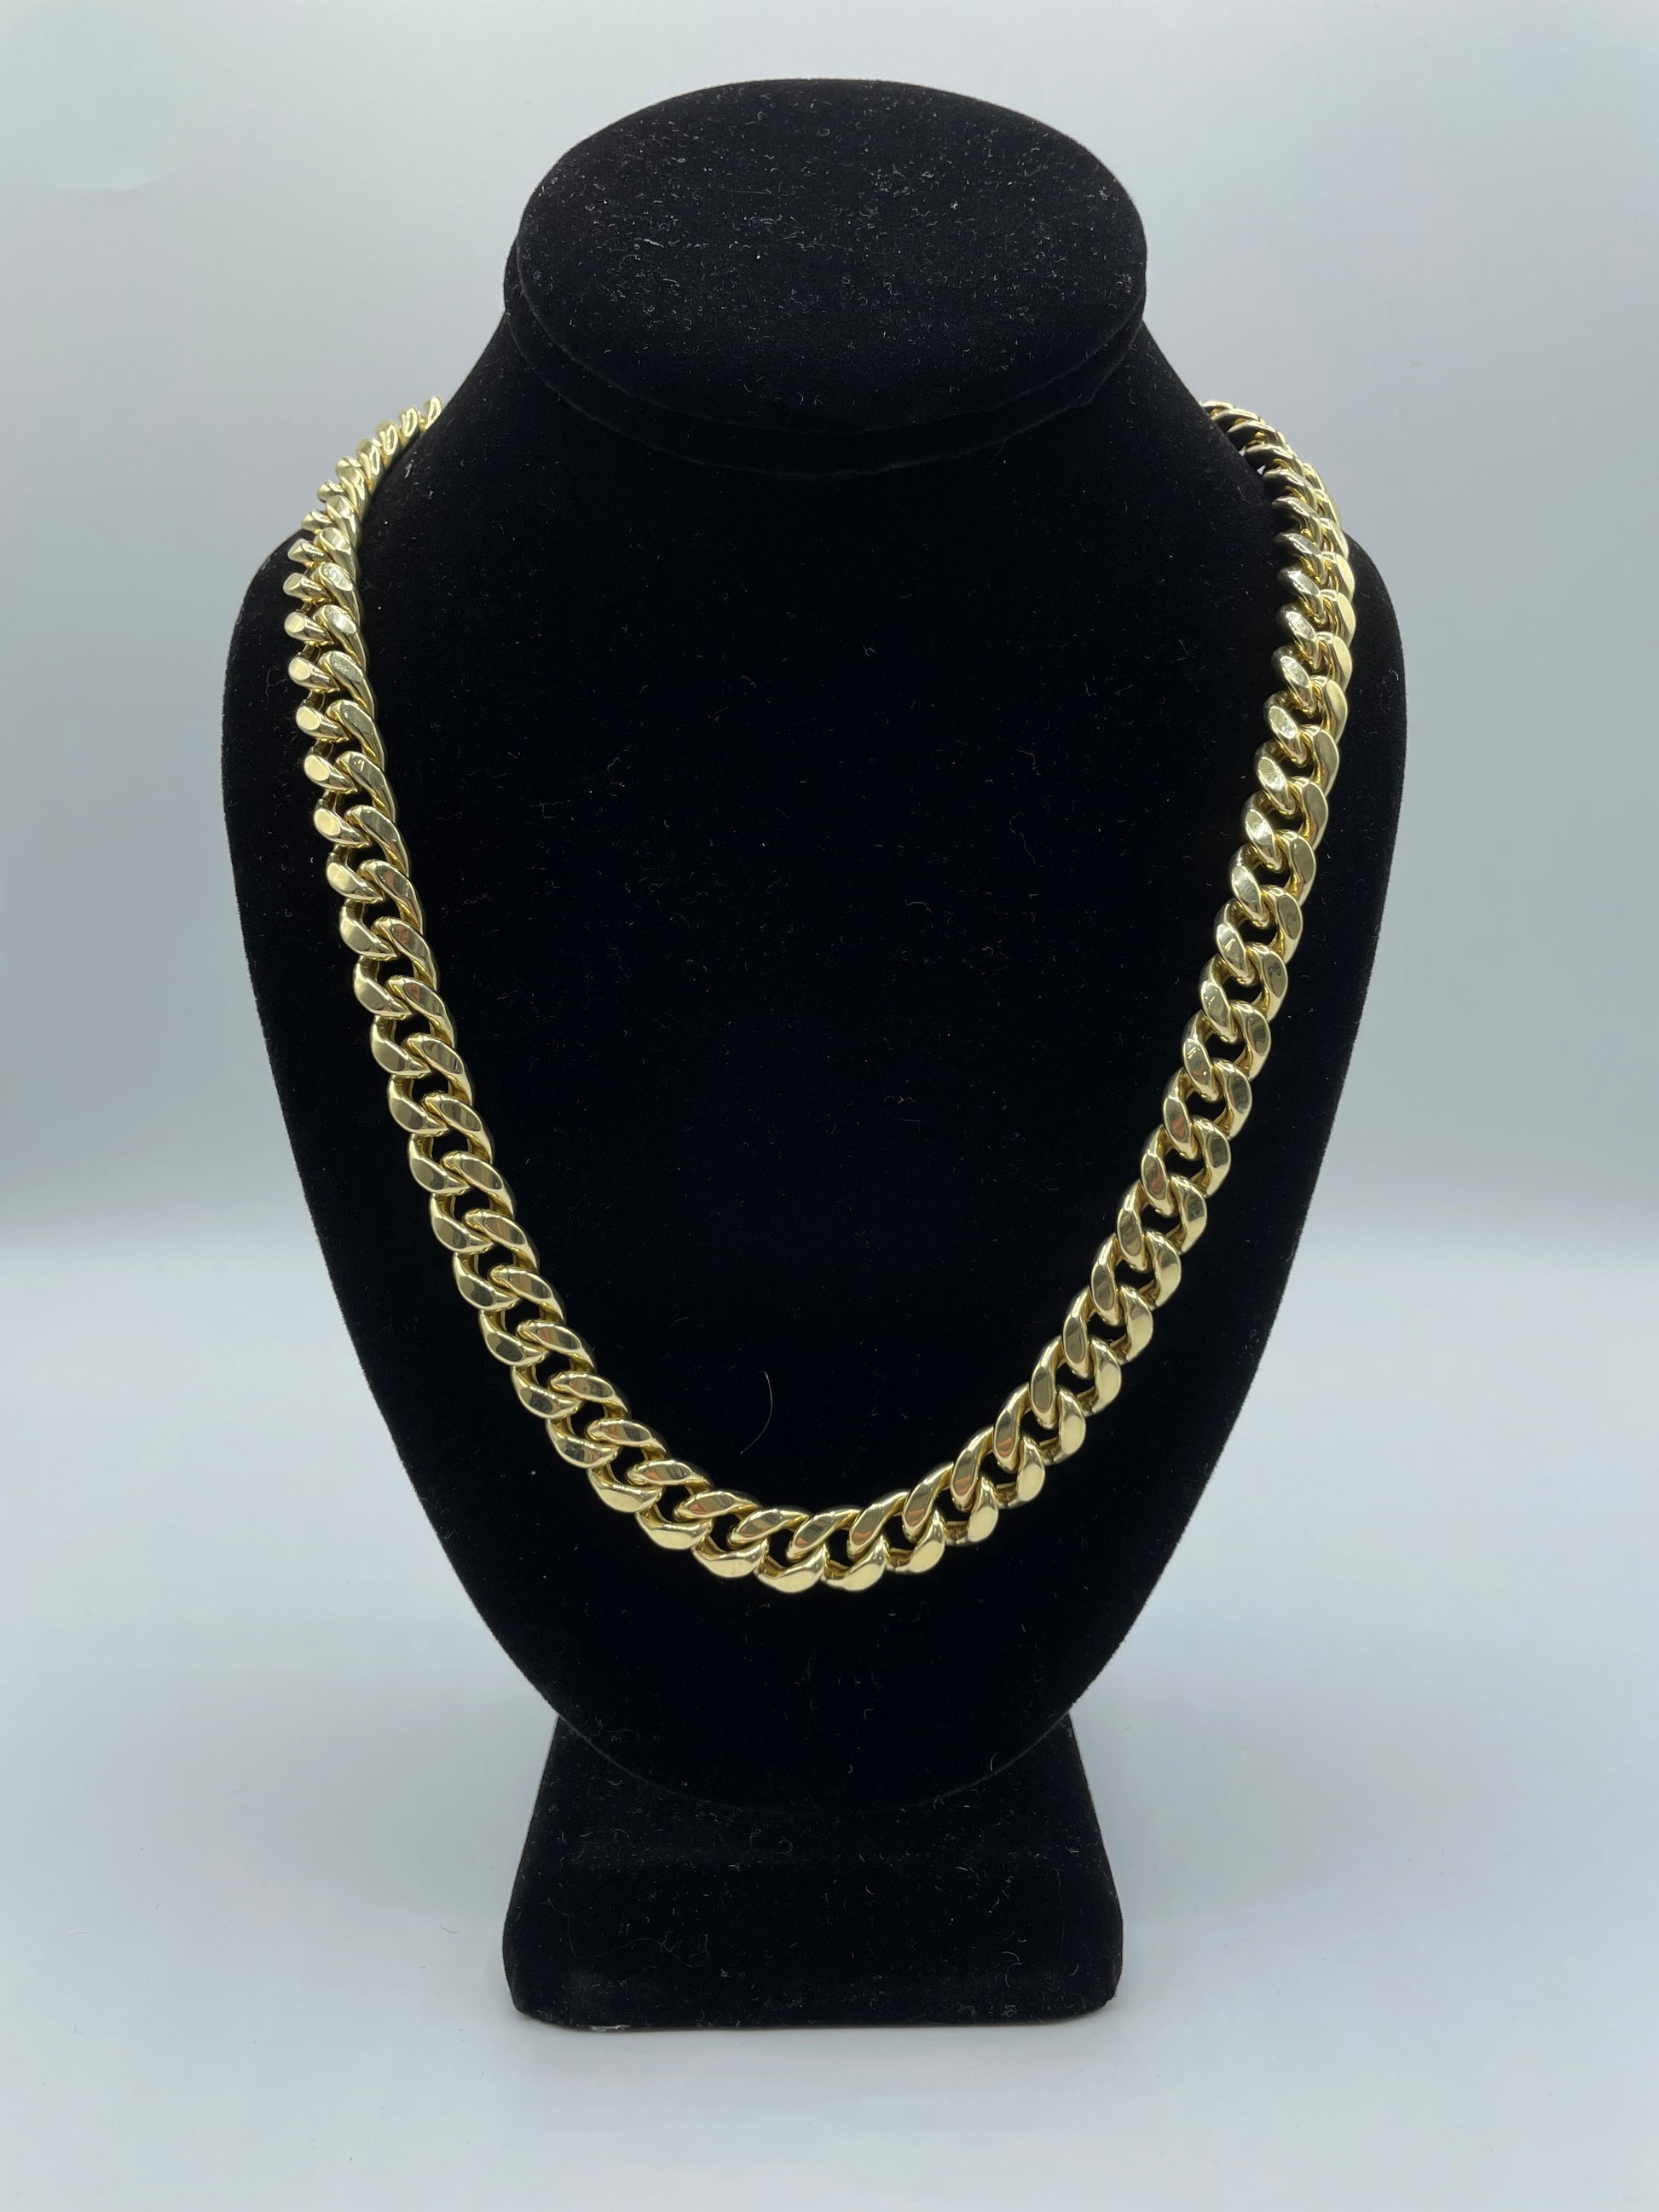  Yellow Gold Semi-Solid Miami Cuban Chain Necklace